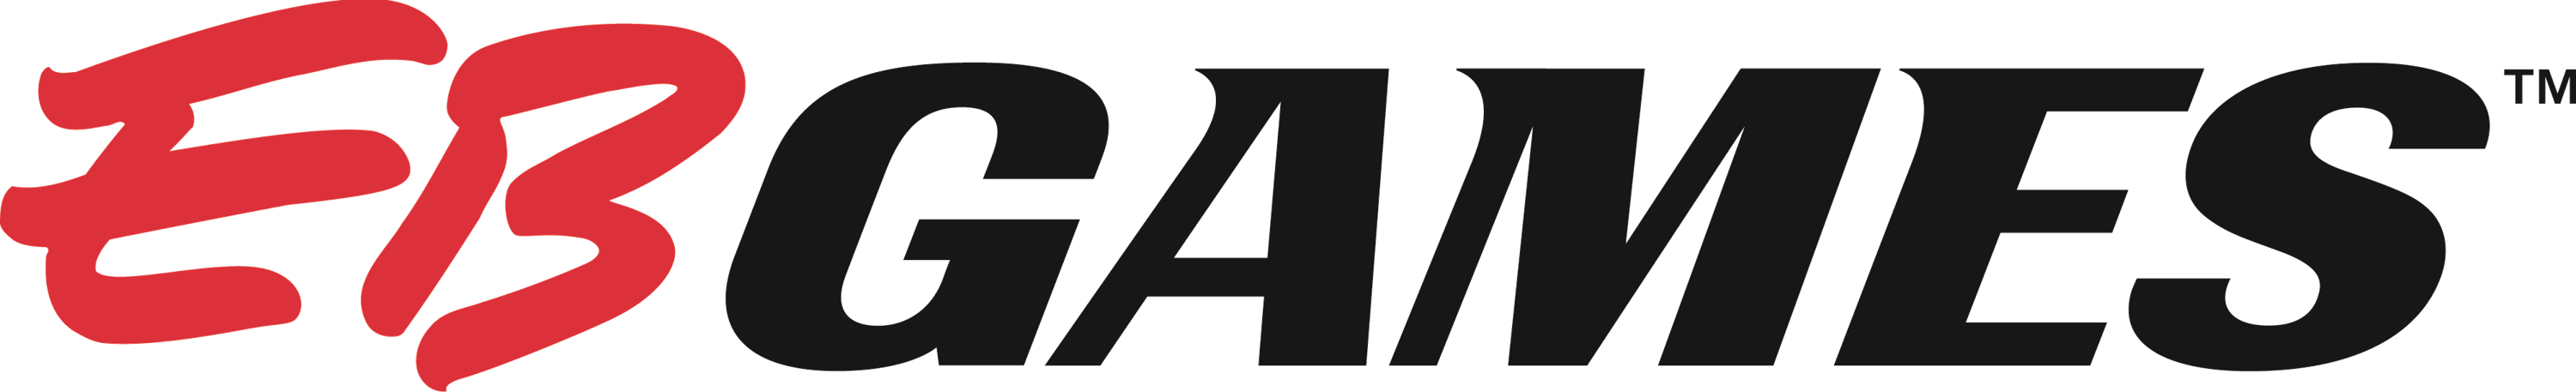 EB Games Logo